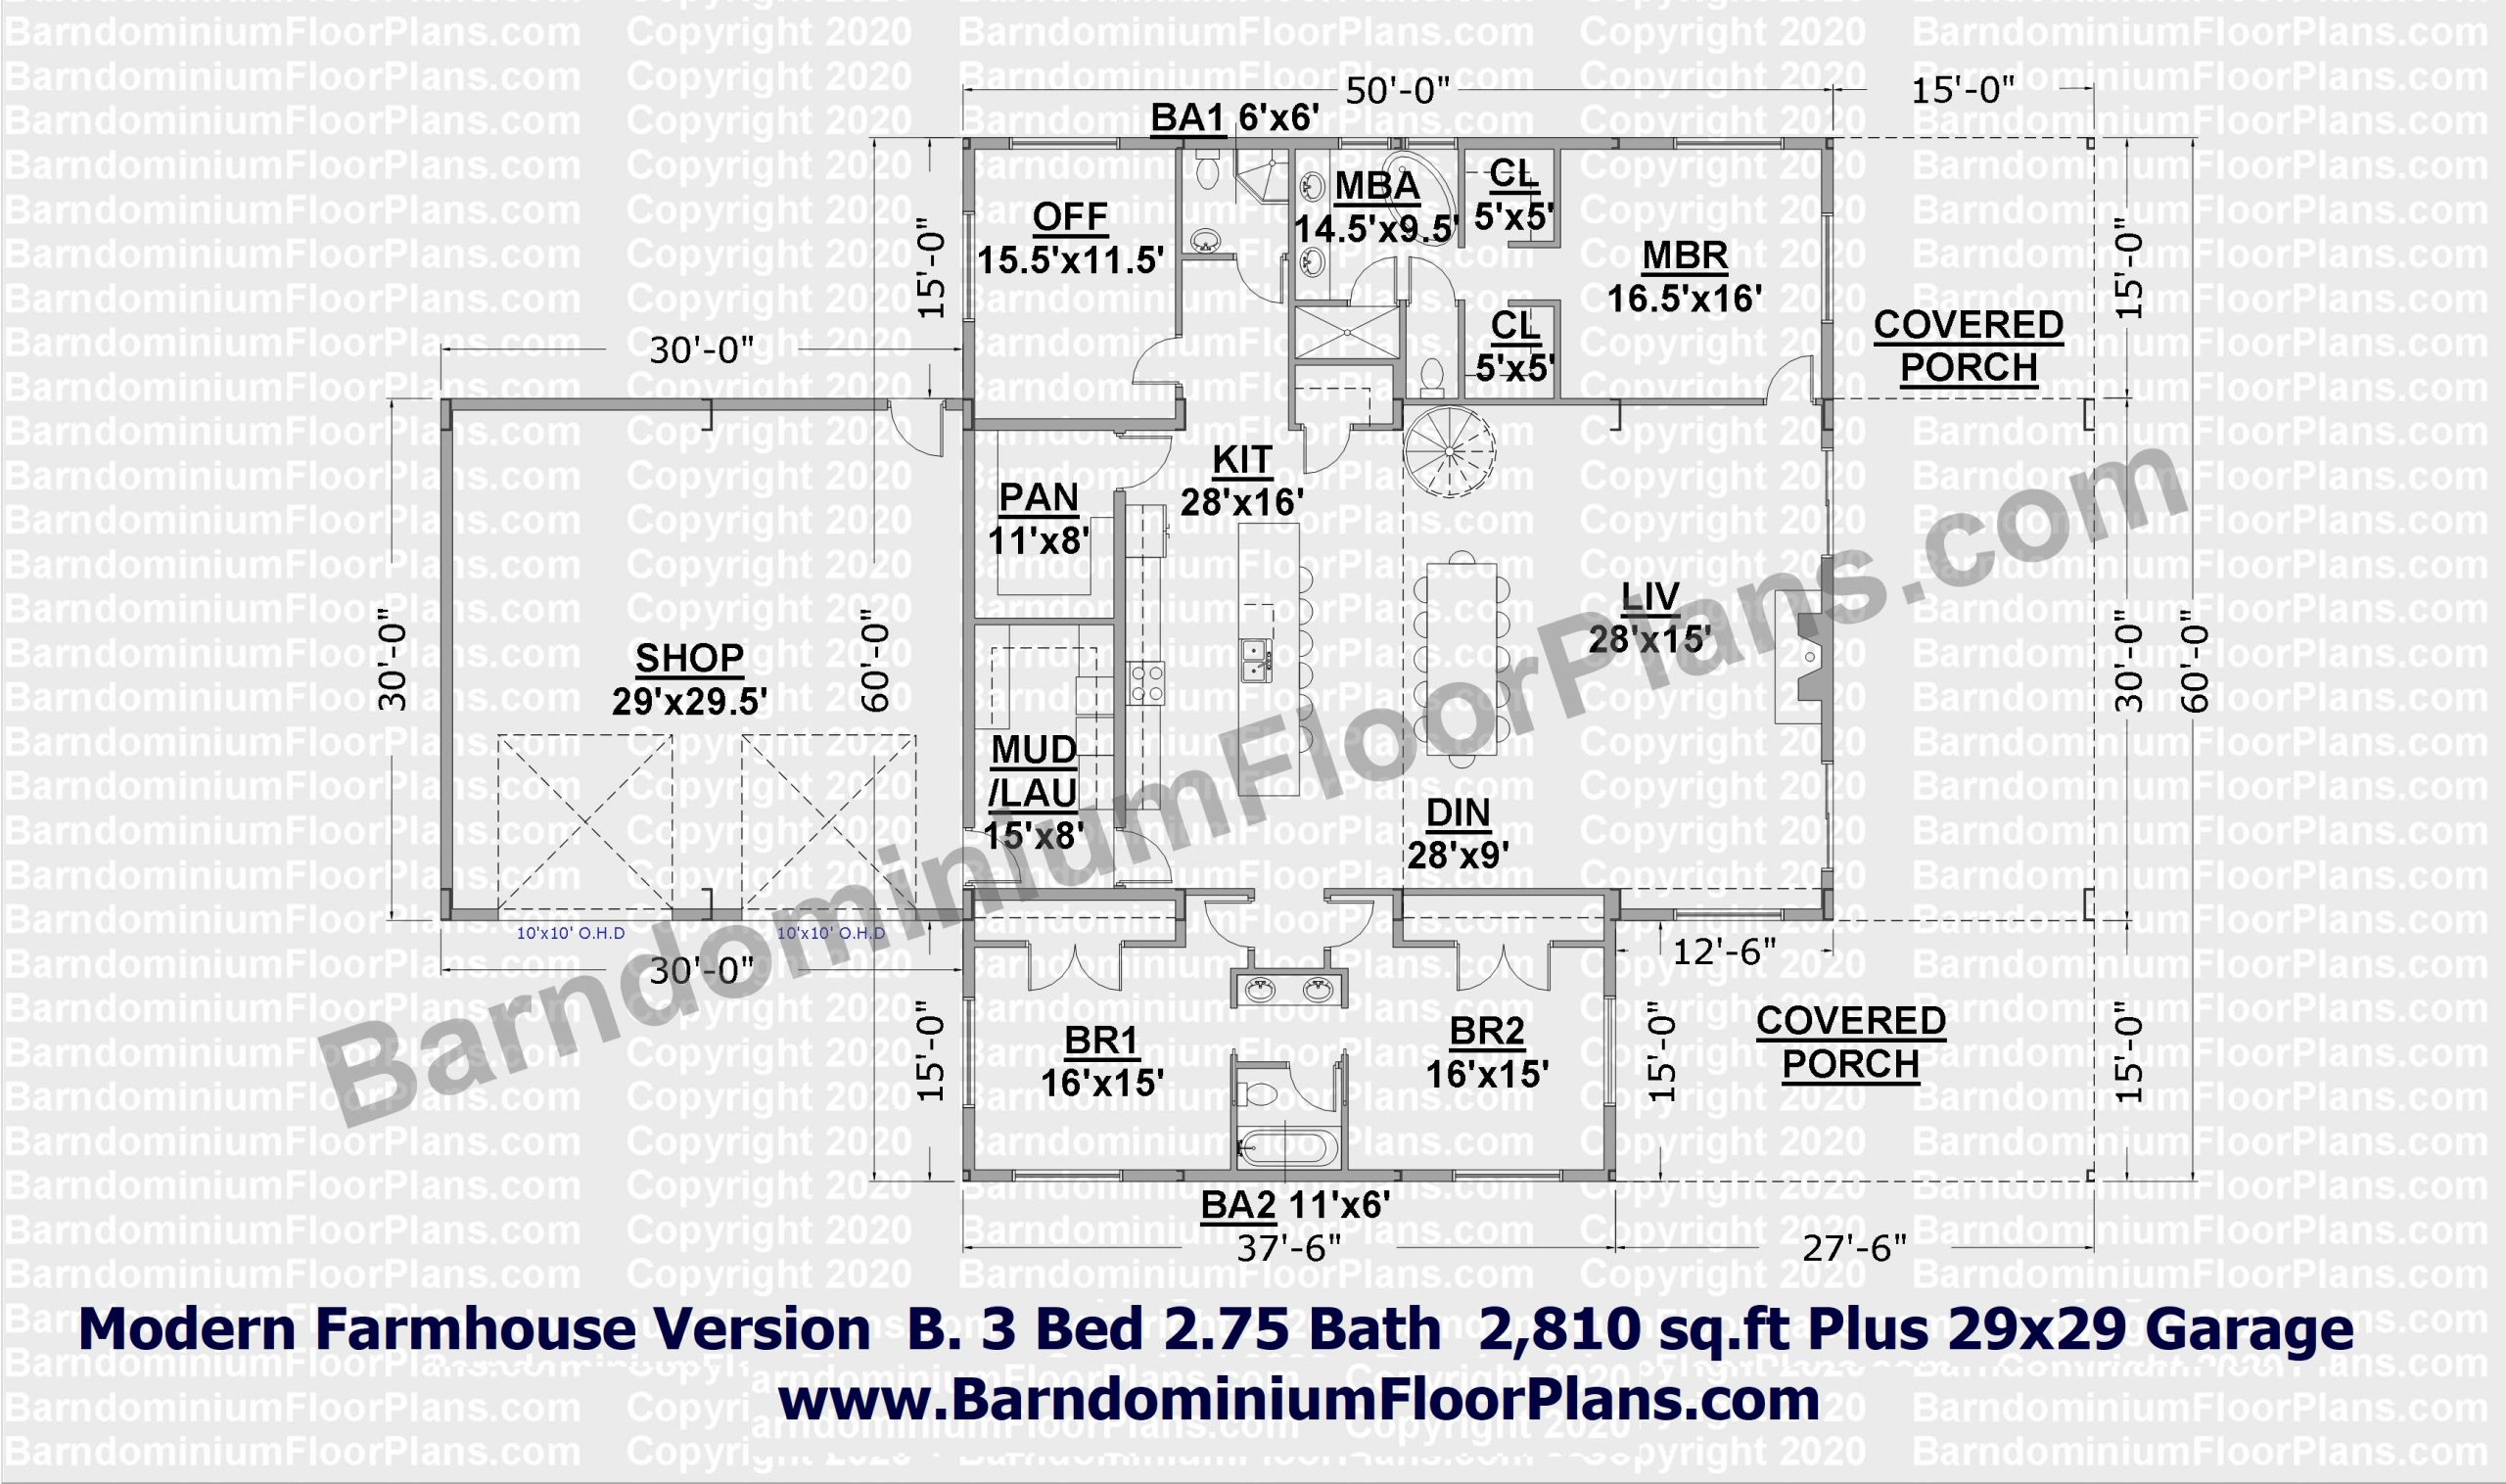 Modern Farmhouse Barndominium Version B 2810 sq.ft Floor Plan